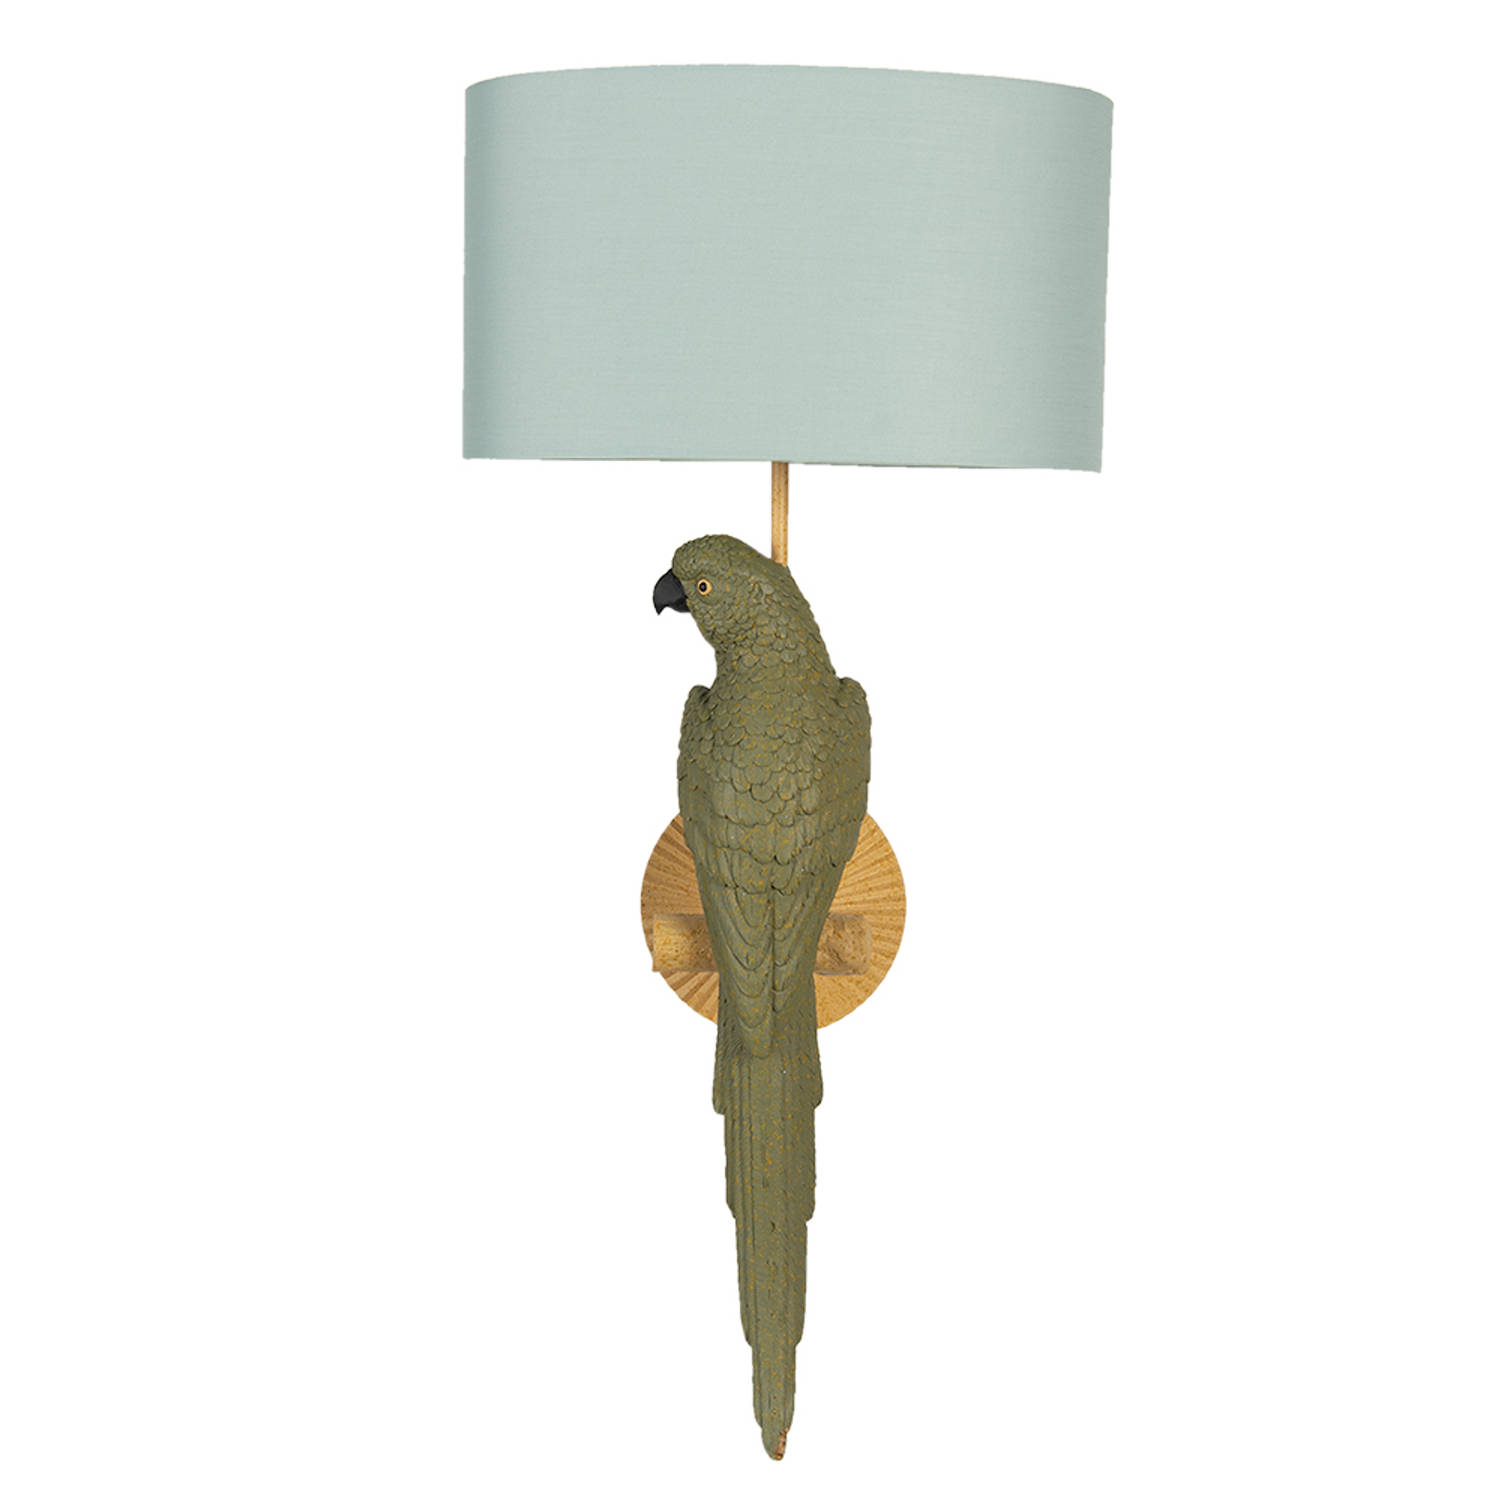 HAES DECO - Wandlamp - City Jungle - Papagaai Lamp, formaat Ø 23*44 cm - Groen Ovaal Polyresin - Muurlamp, Sfeerlamp